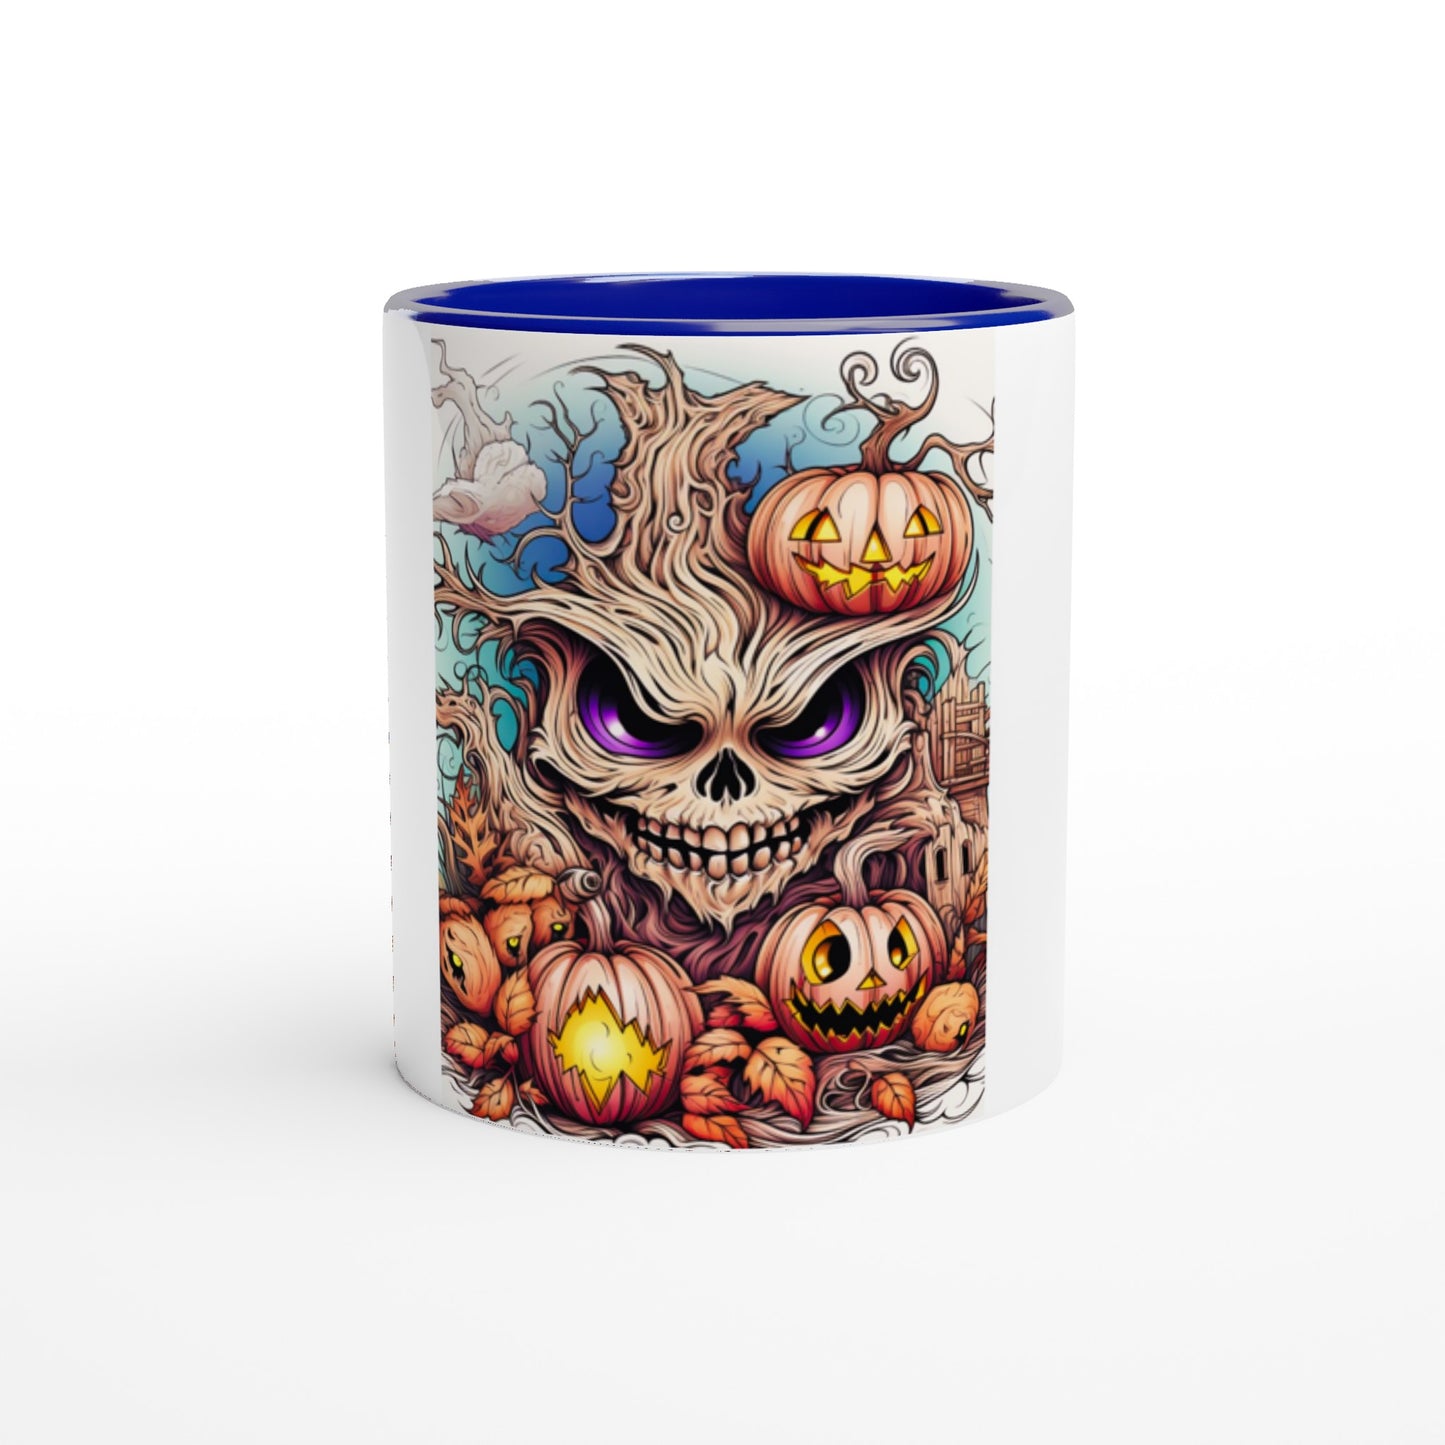 Skull tree and Pumpkins| Mug | Dishwasher and Microwave safe